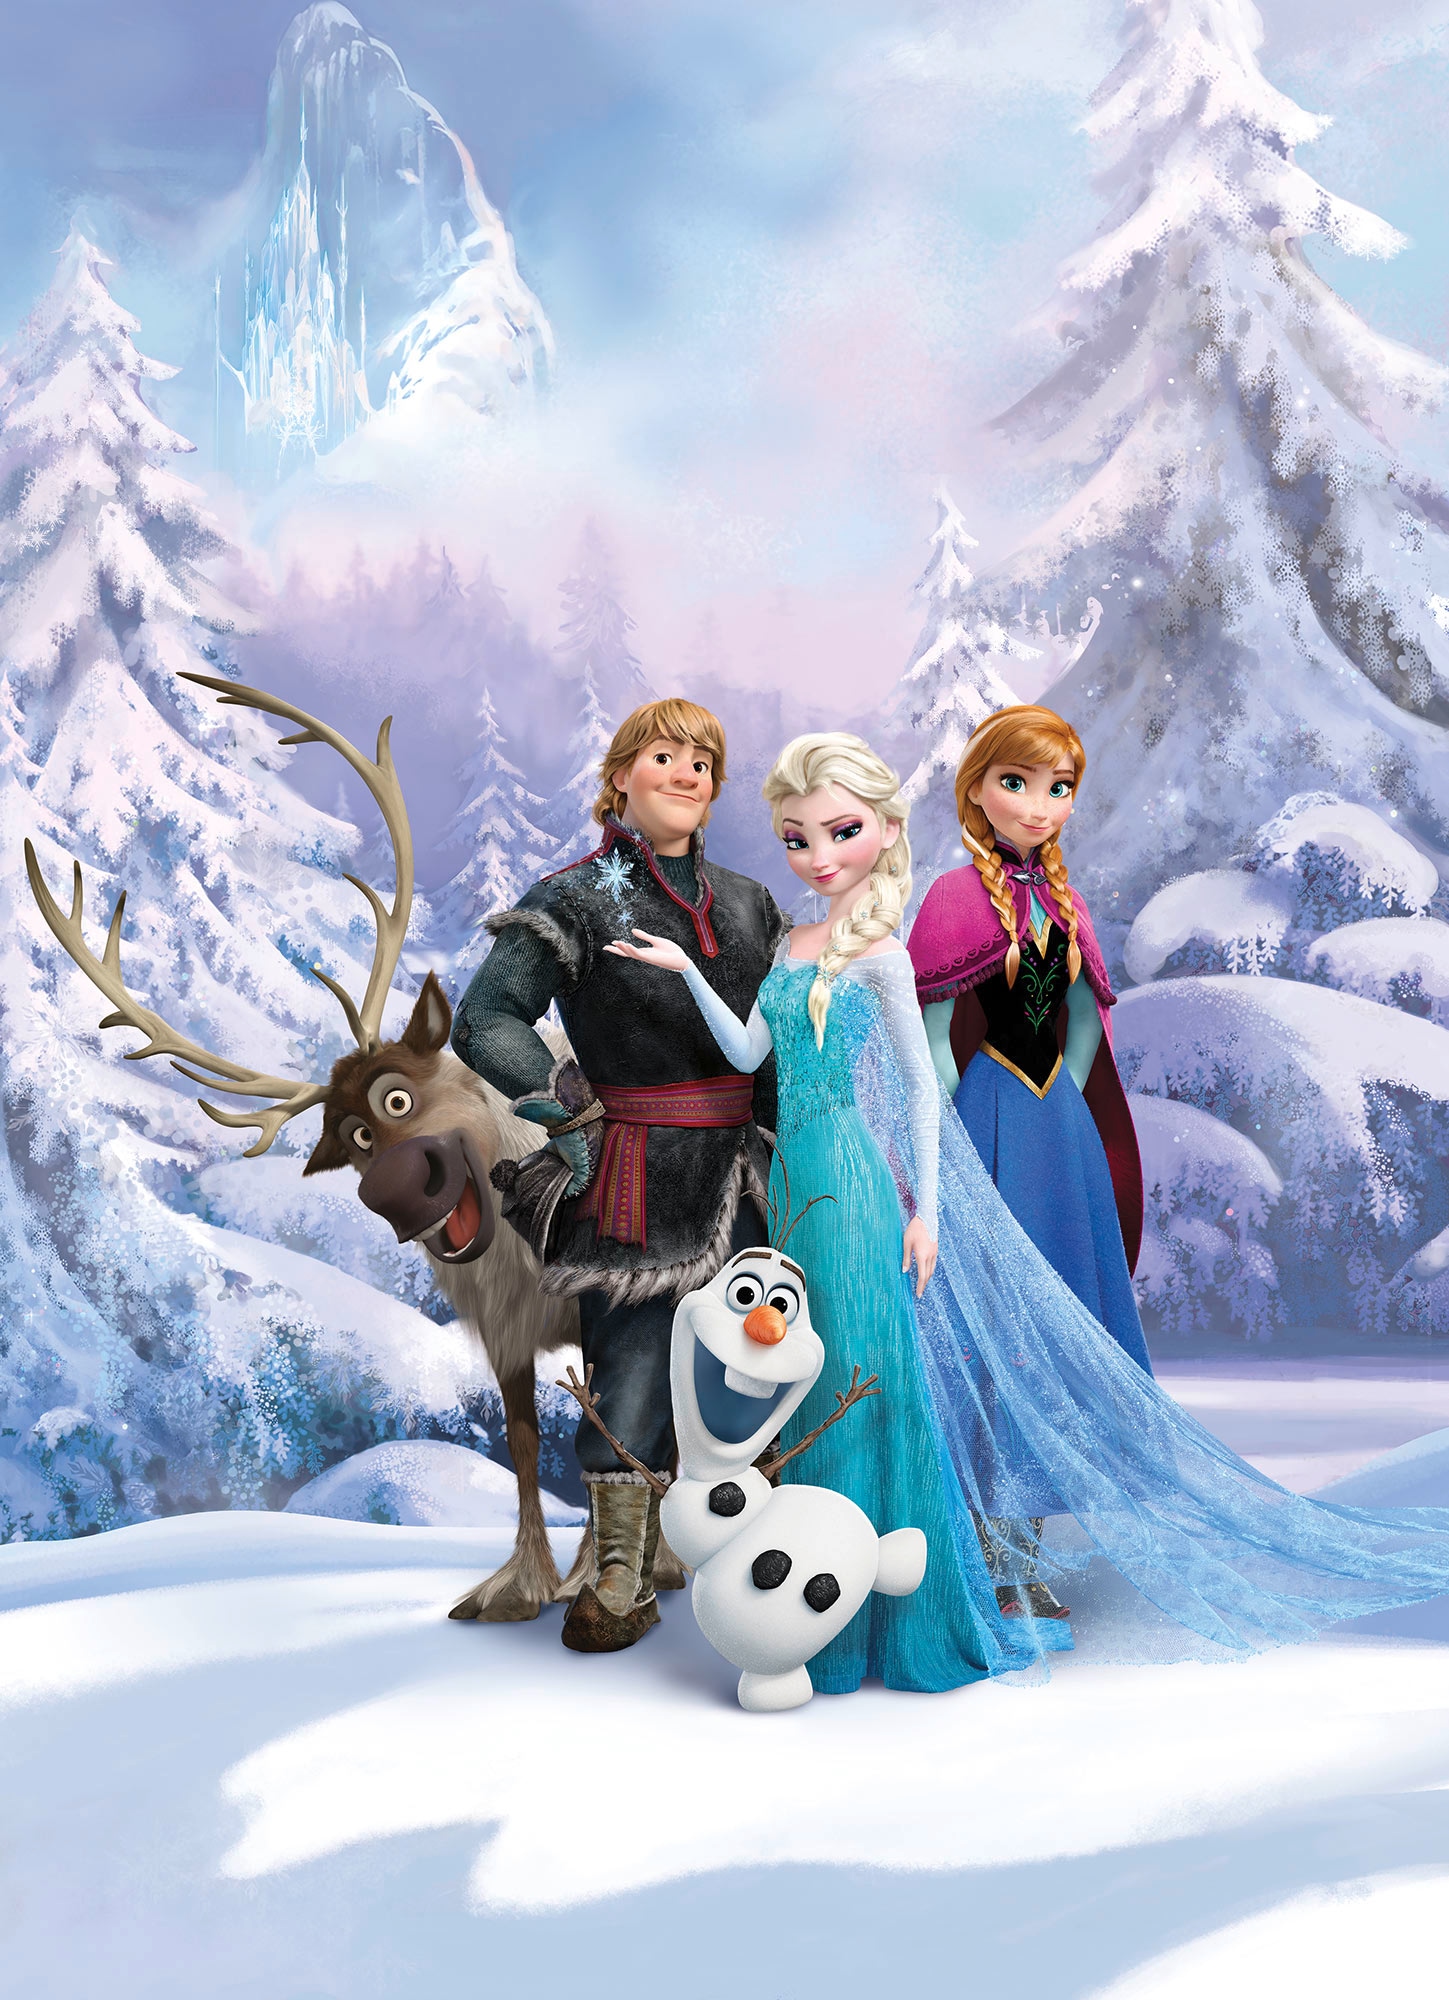 - »Poster - Poster Reinders! - Frozen Olaf Film, 2 (1 Disney«, Elsa Anna bei St.) OTTO